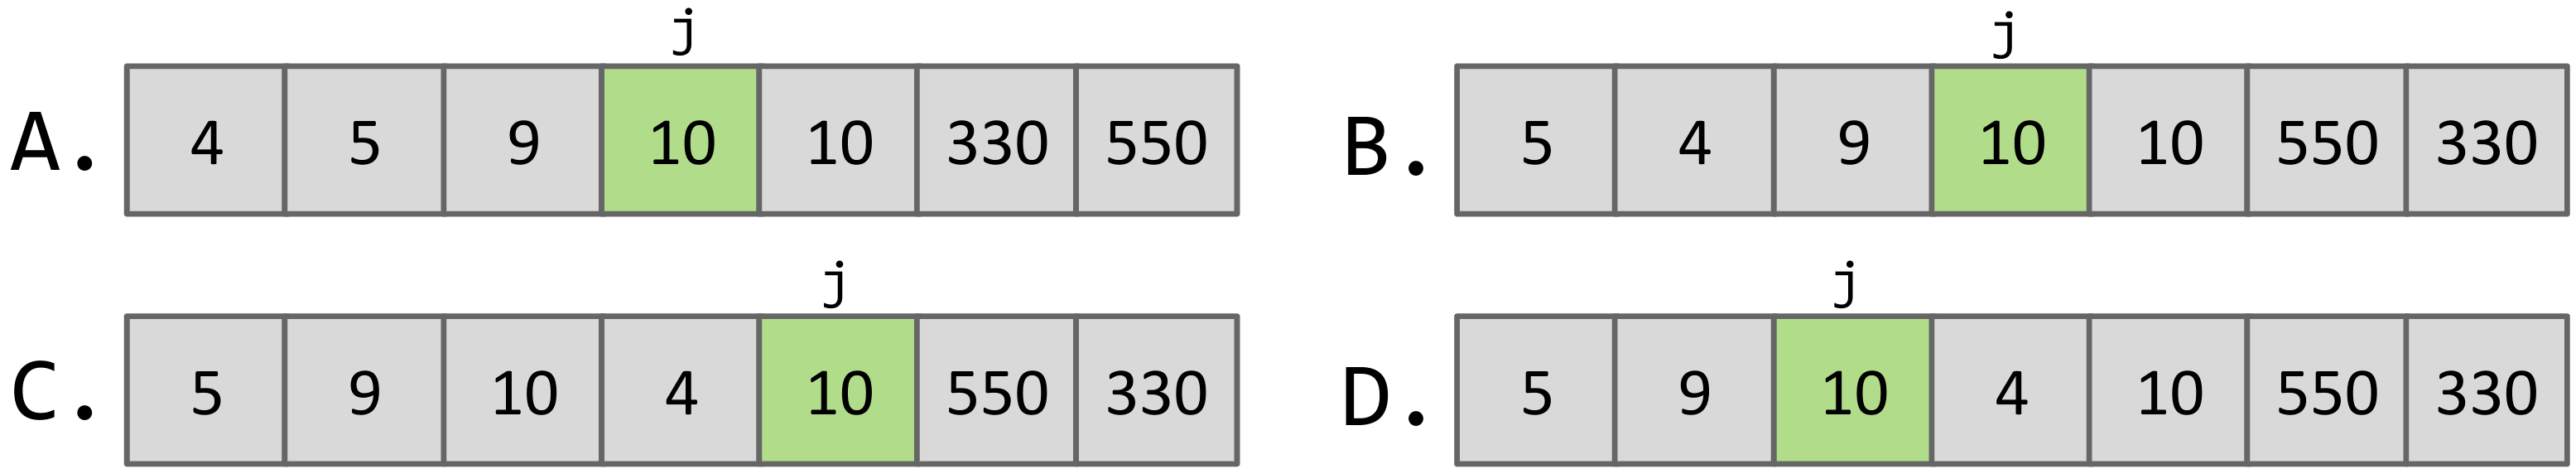 Quicksort partitioning options